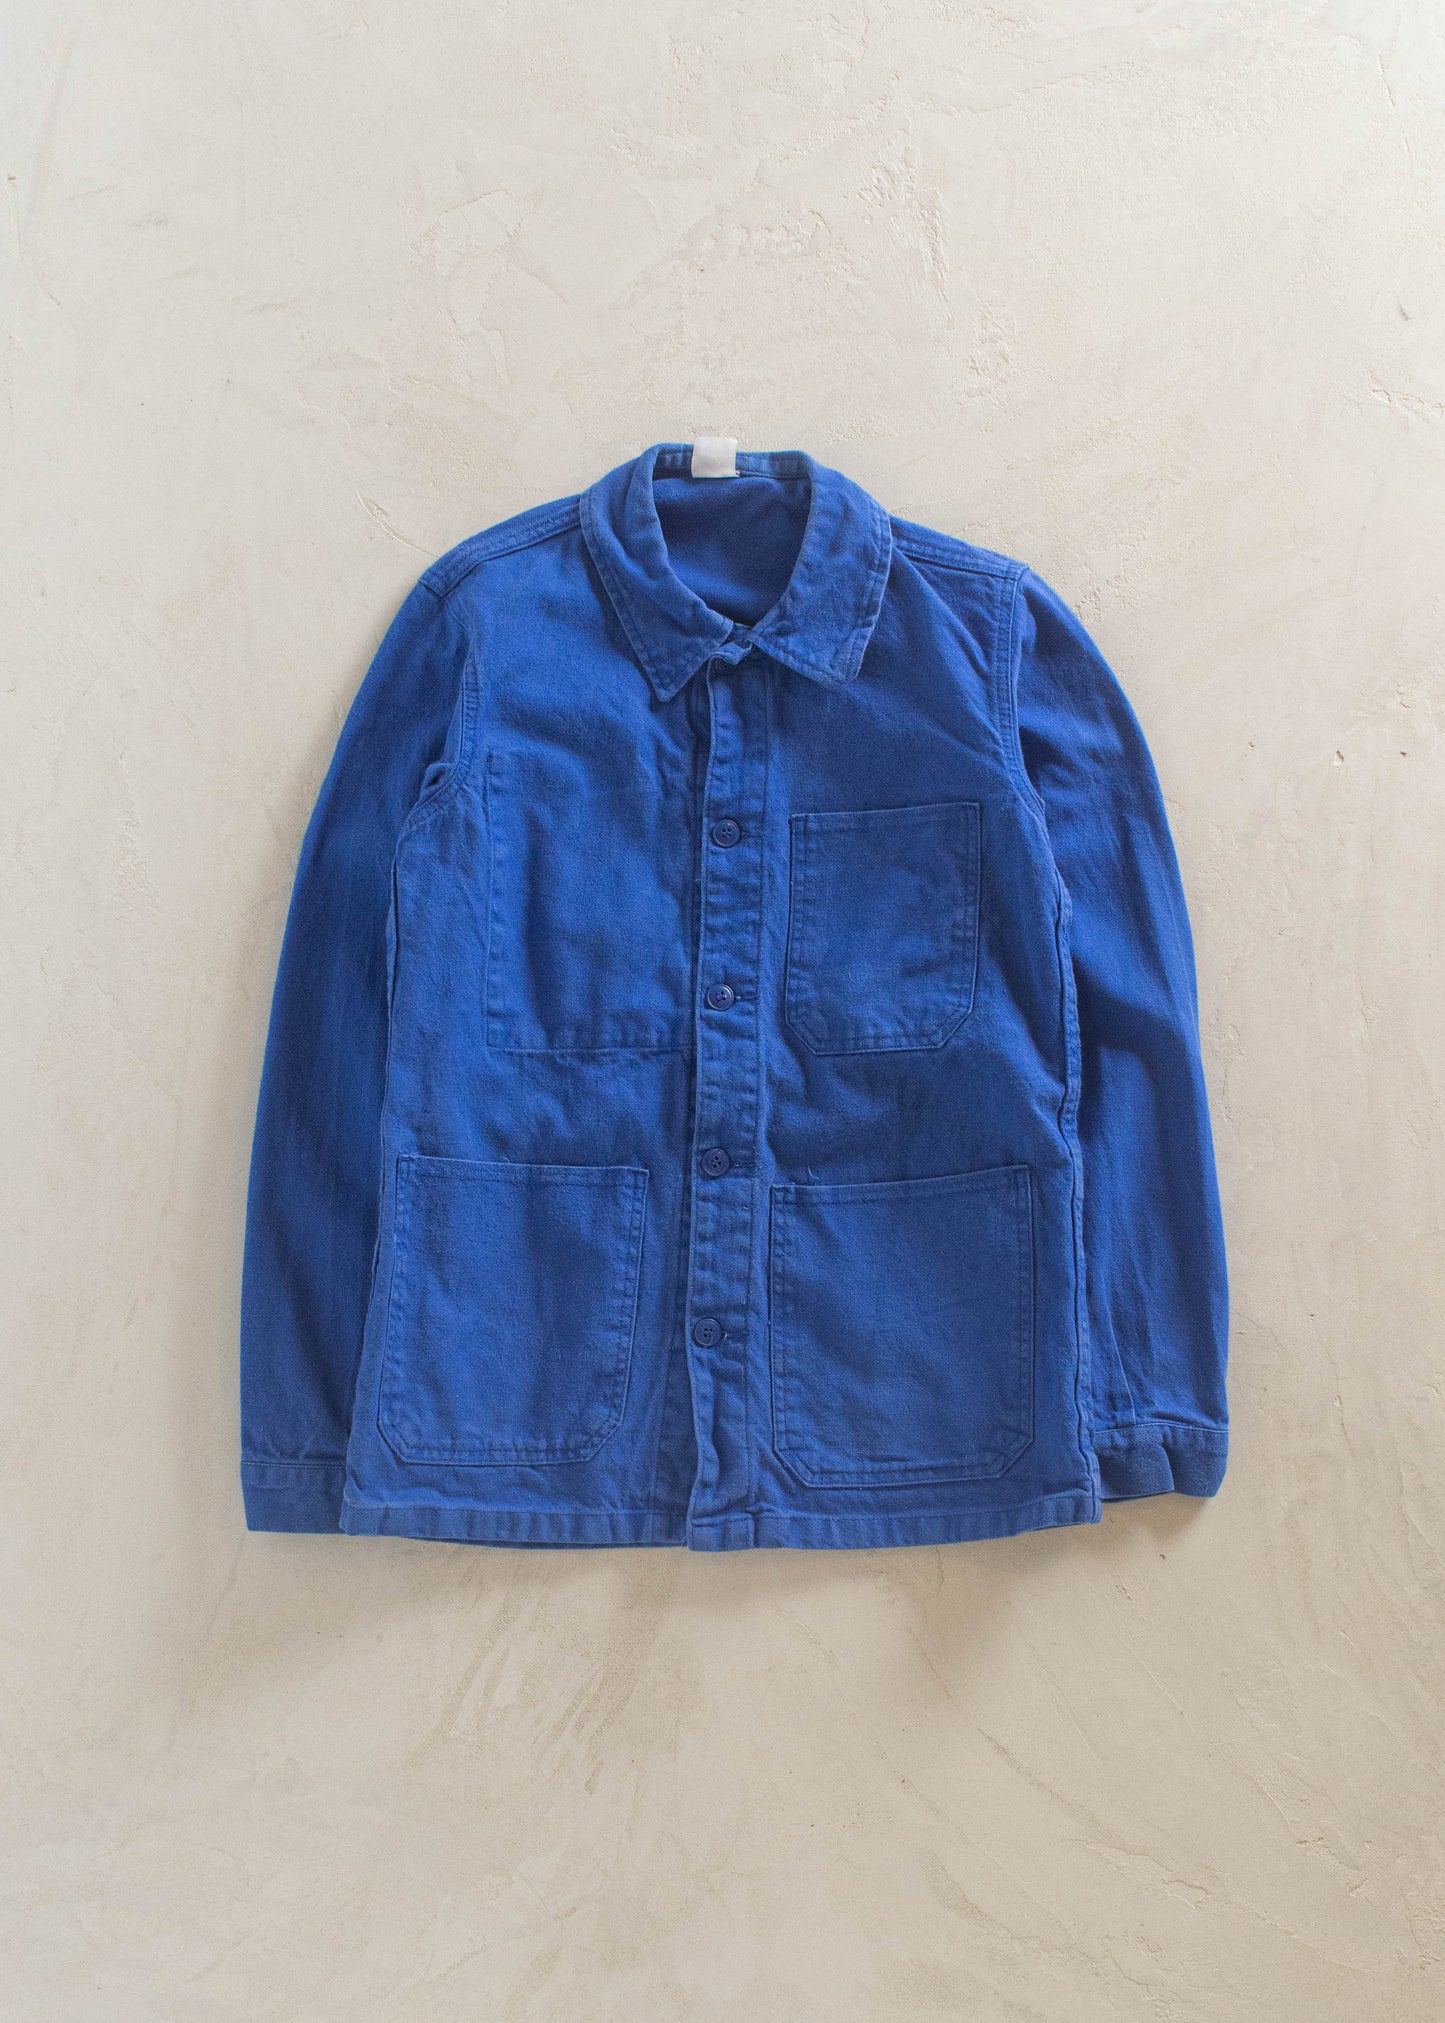 1980s Bleu de Travail French Workwear Chore Jacket Size XS/S